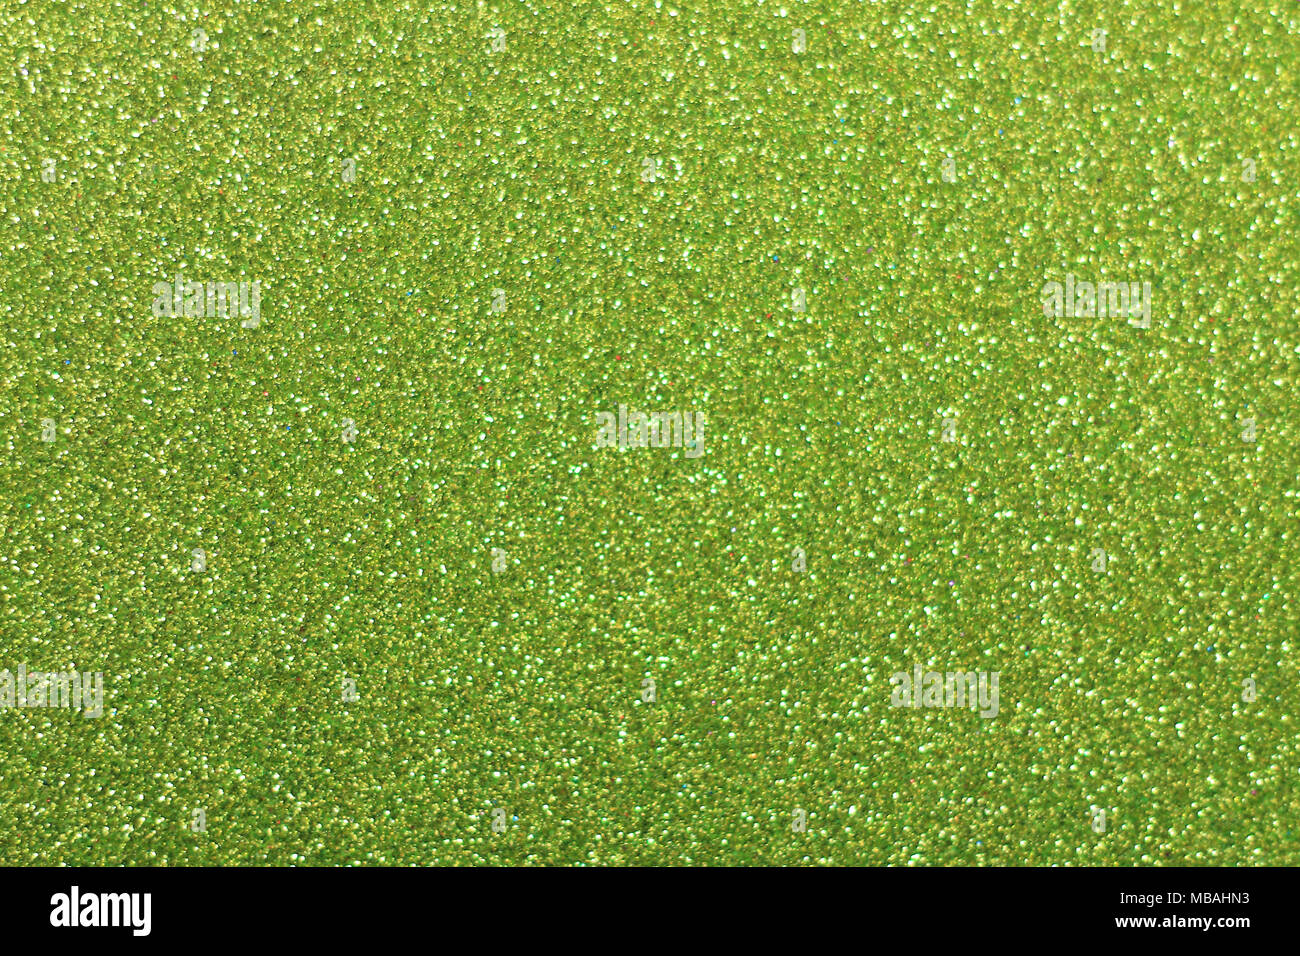 Verde Blu di ghiaia sabbia sgranate textured astratta cornice di sfondo Foto Stock